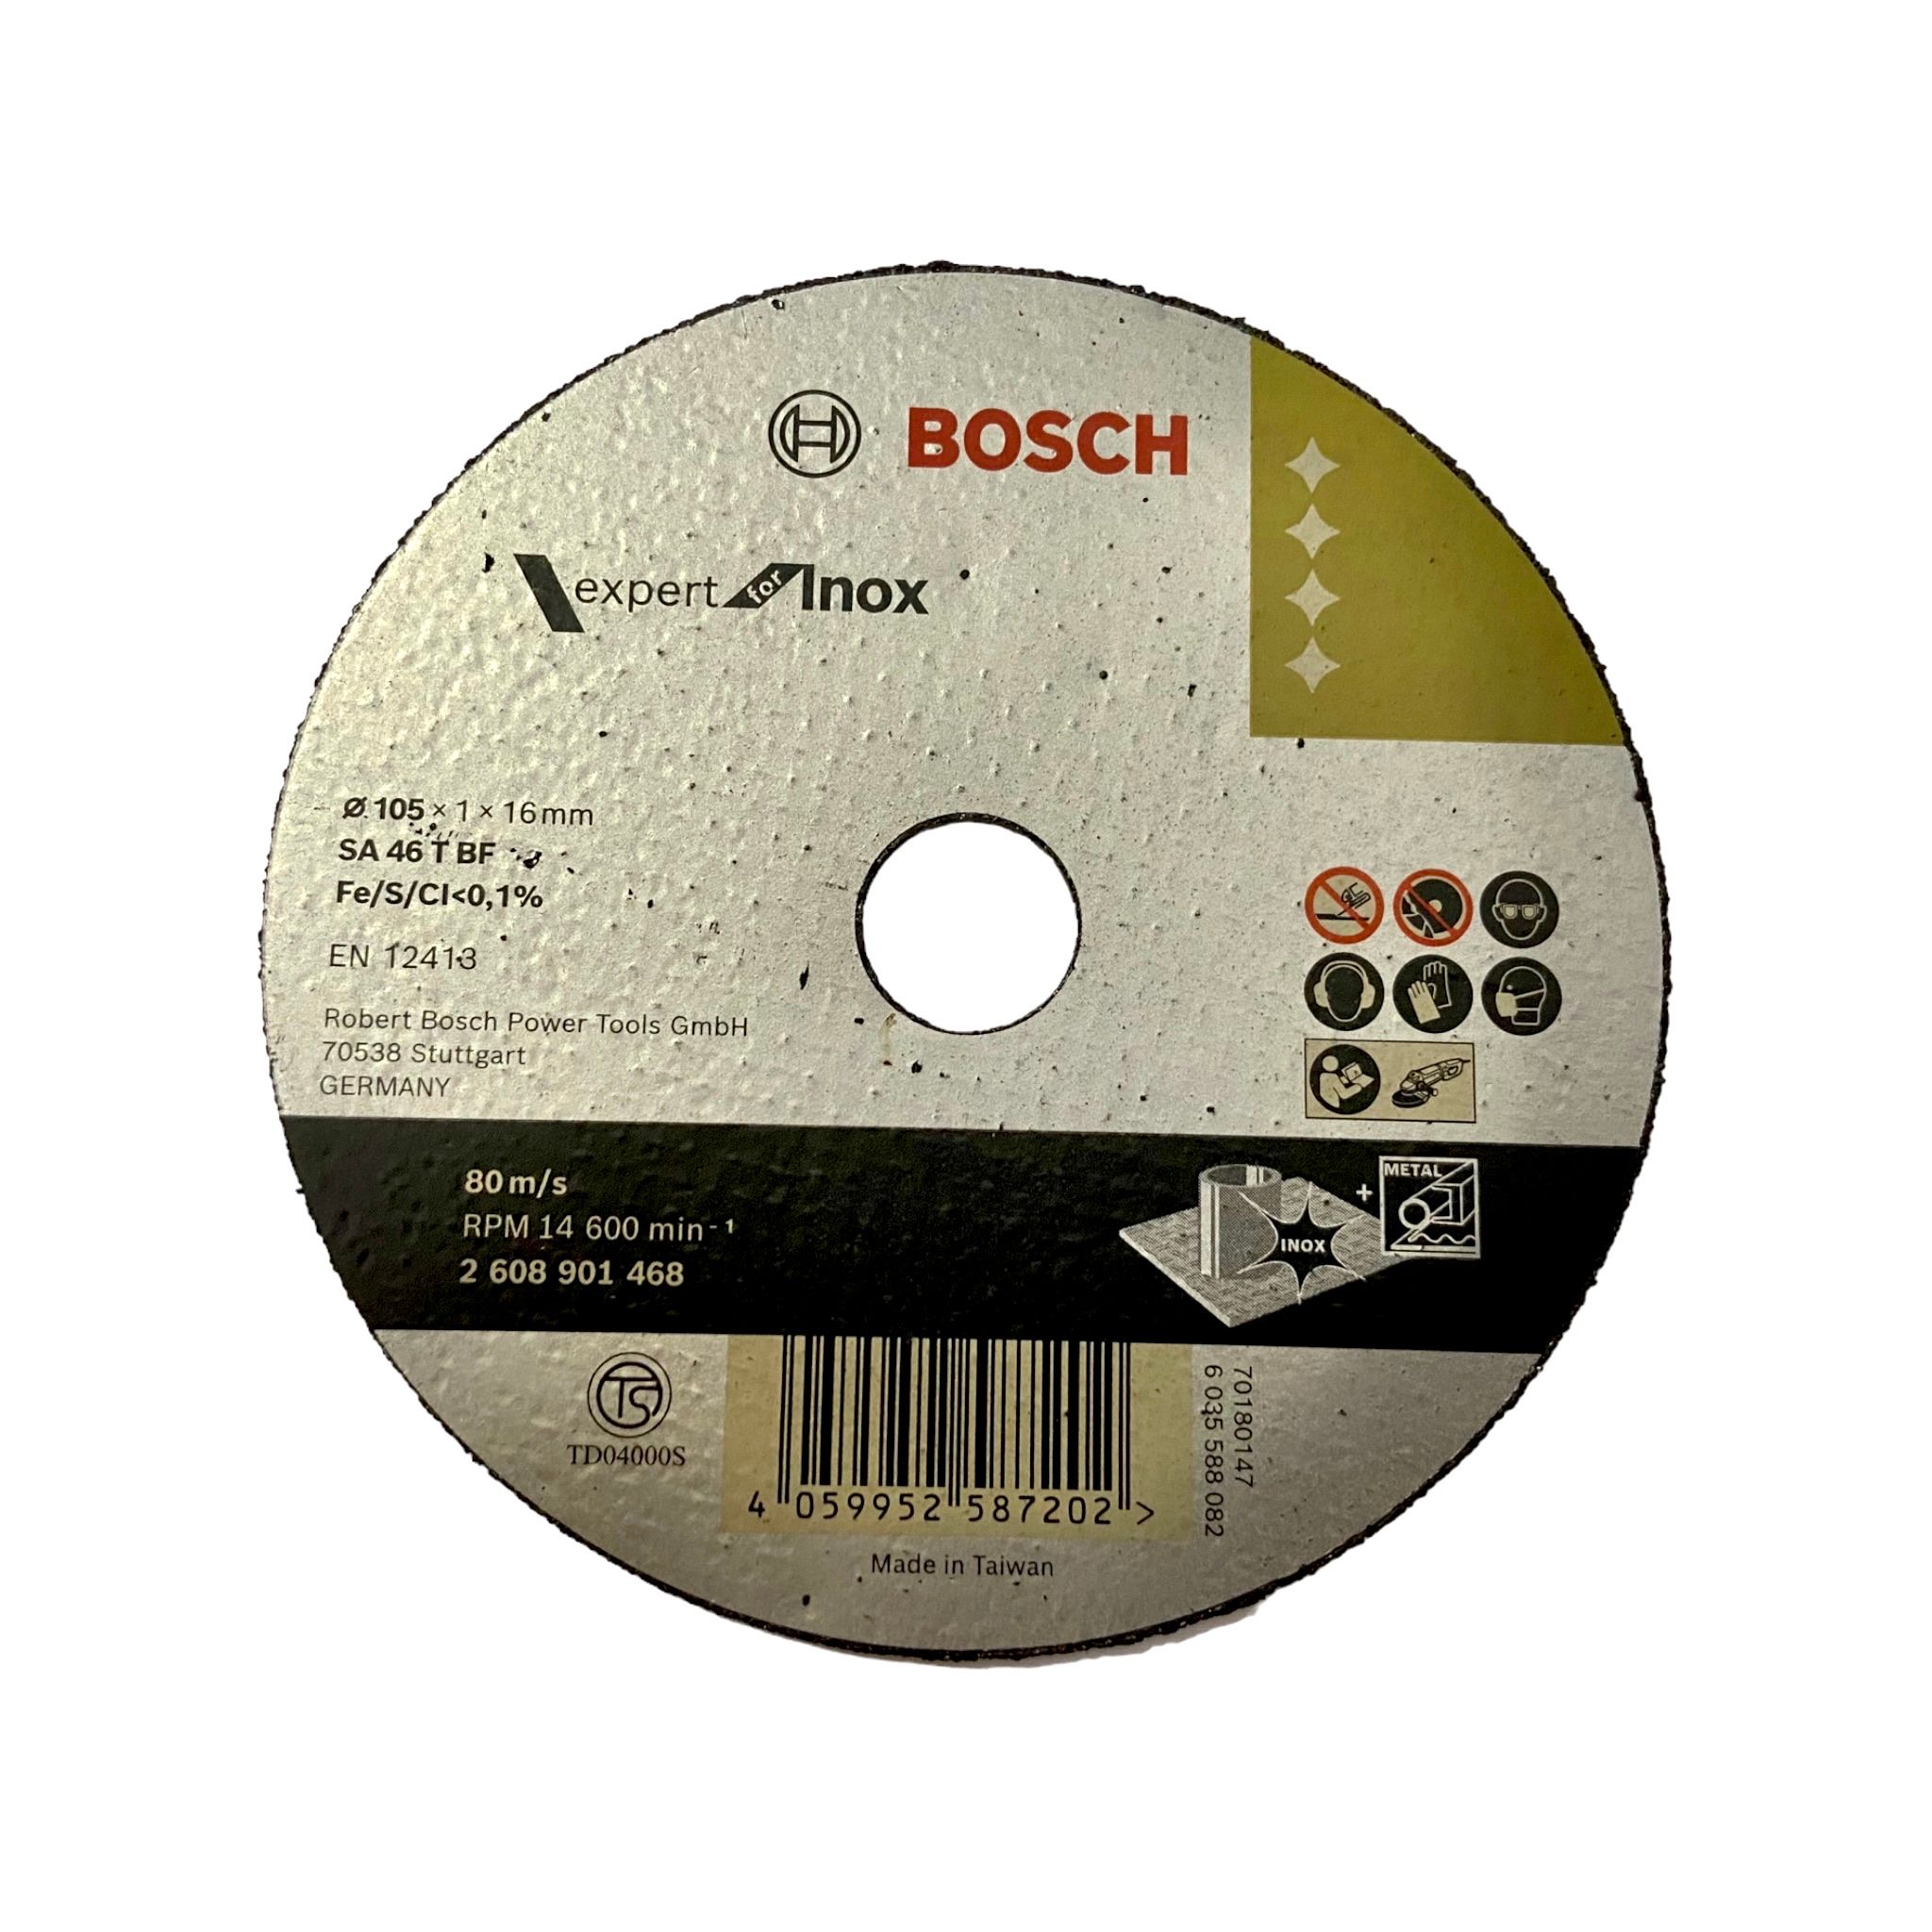  Đá cắt Inox Bosch 105x1.0x16mm 2608901468 